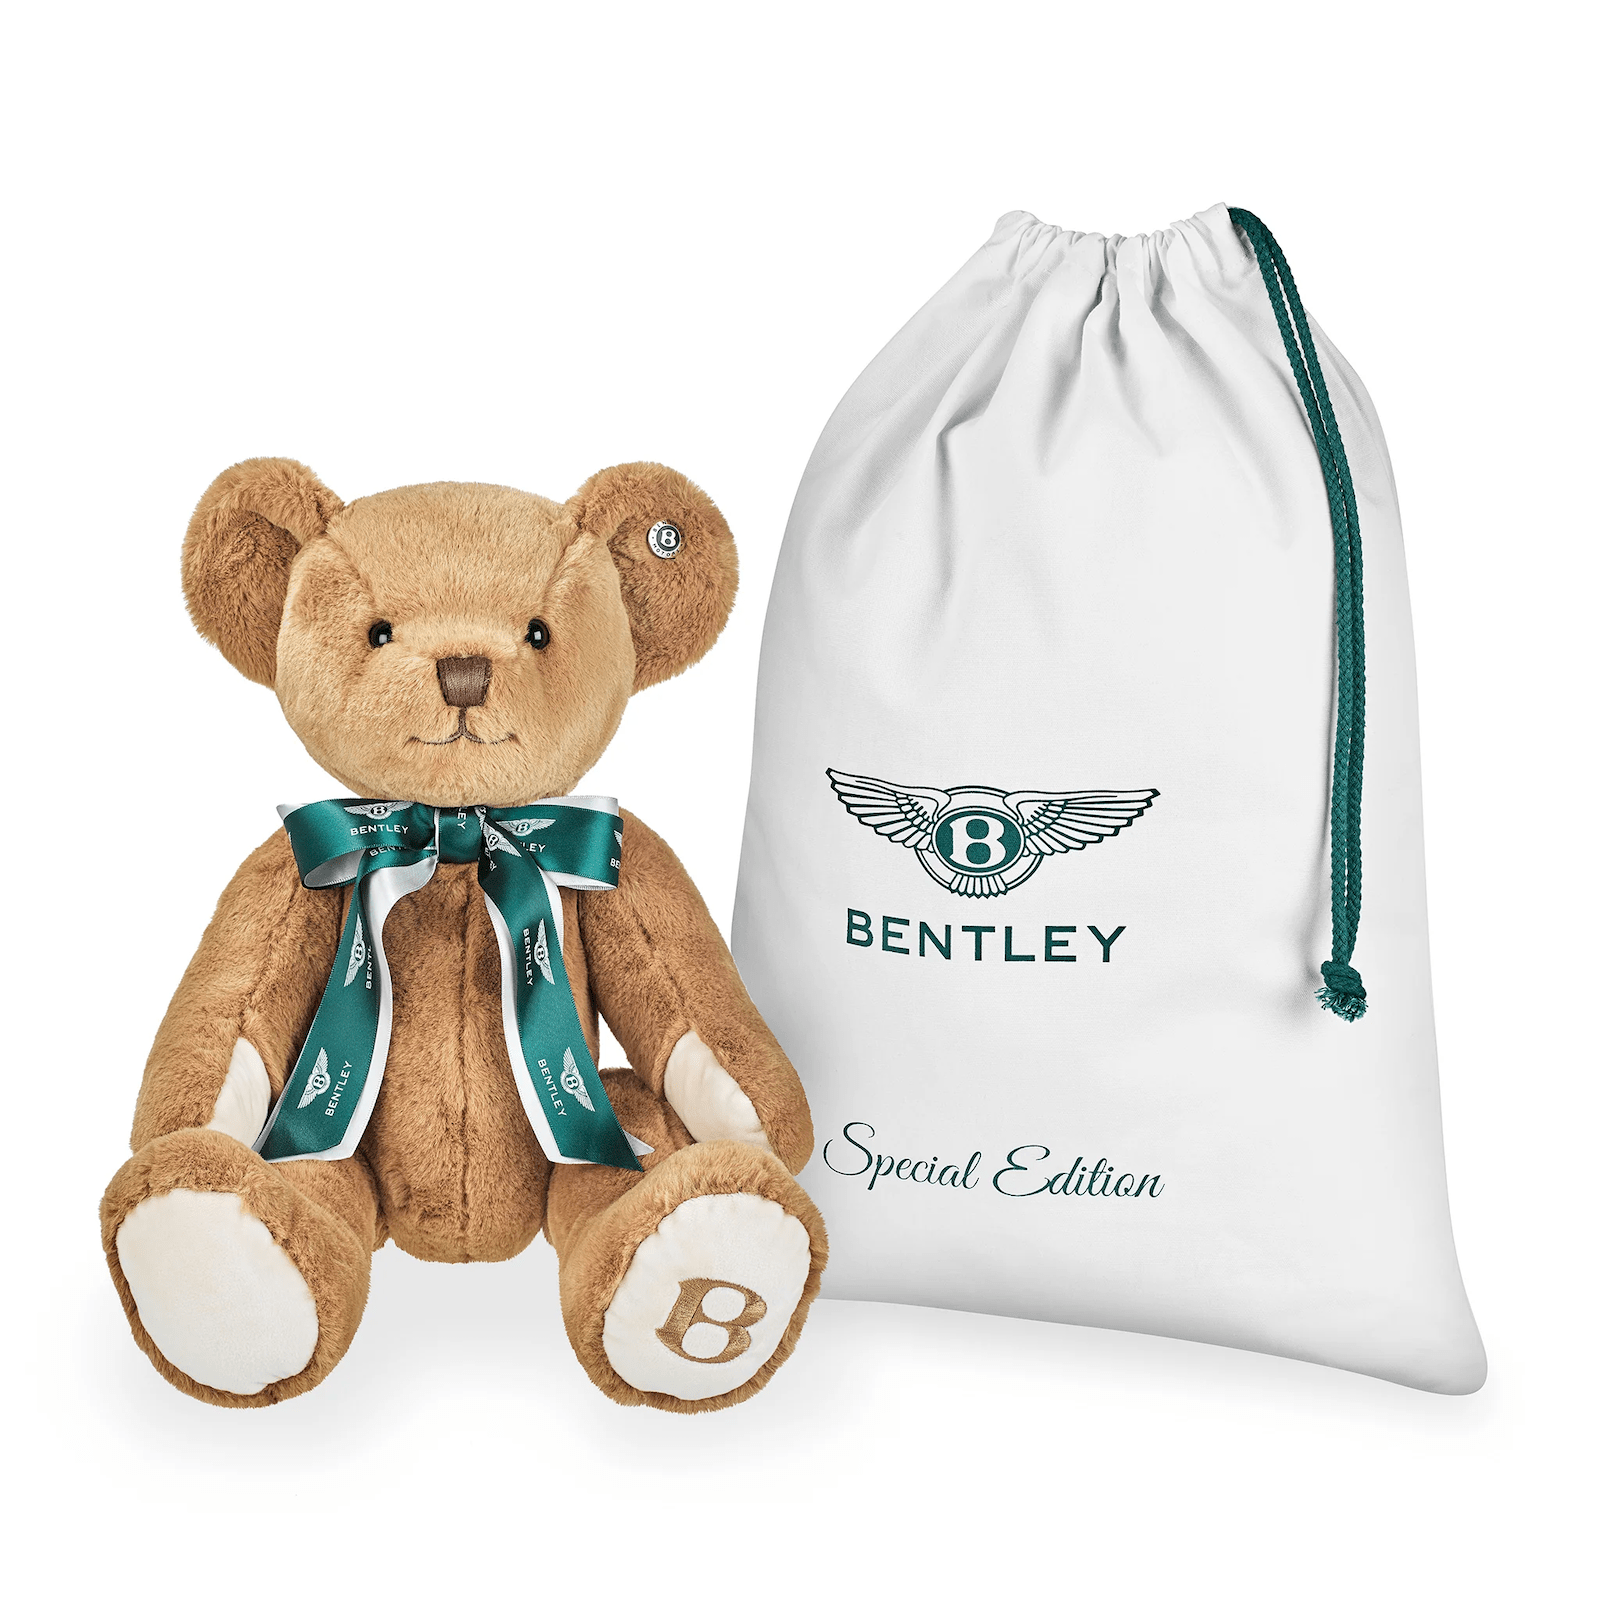 Bentley Teddy Bears